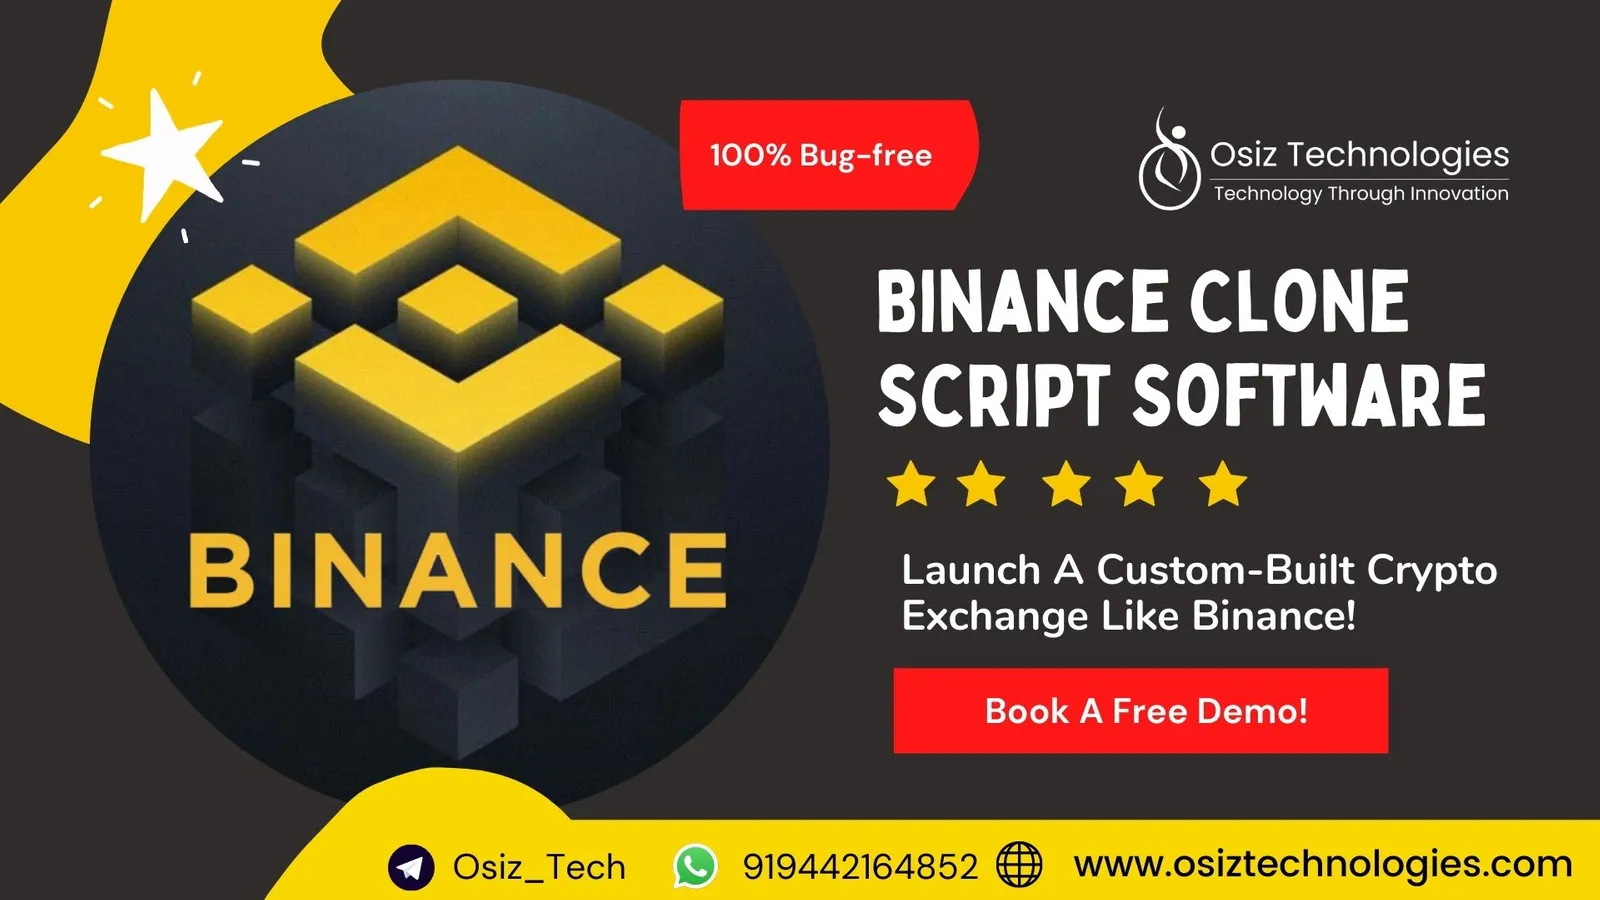 Binance Clone: Launch A Custom-Built Crypto Exchange Like Binance